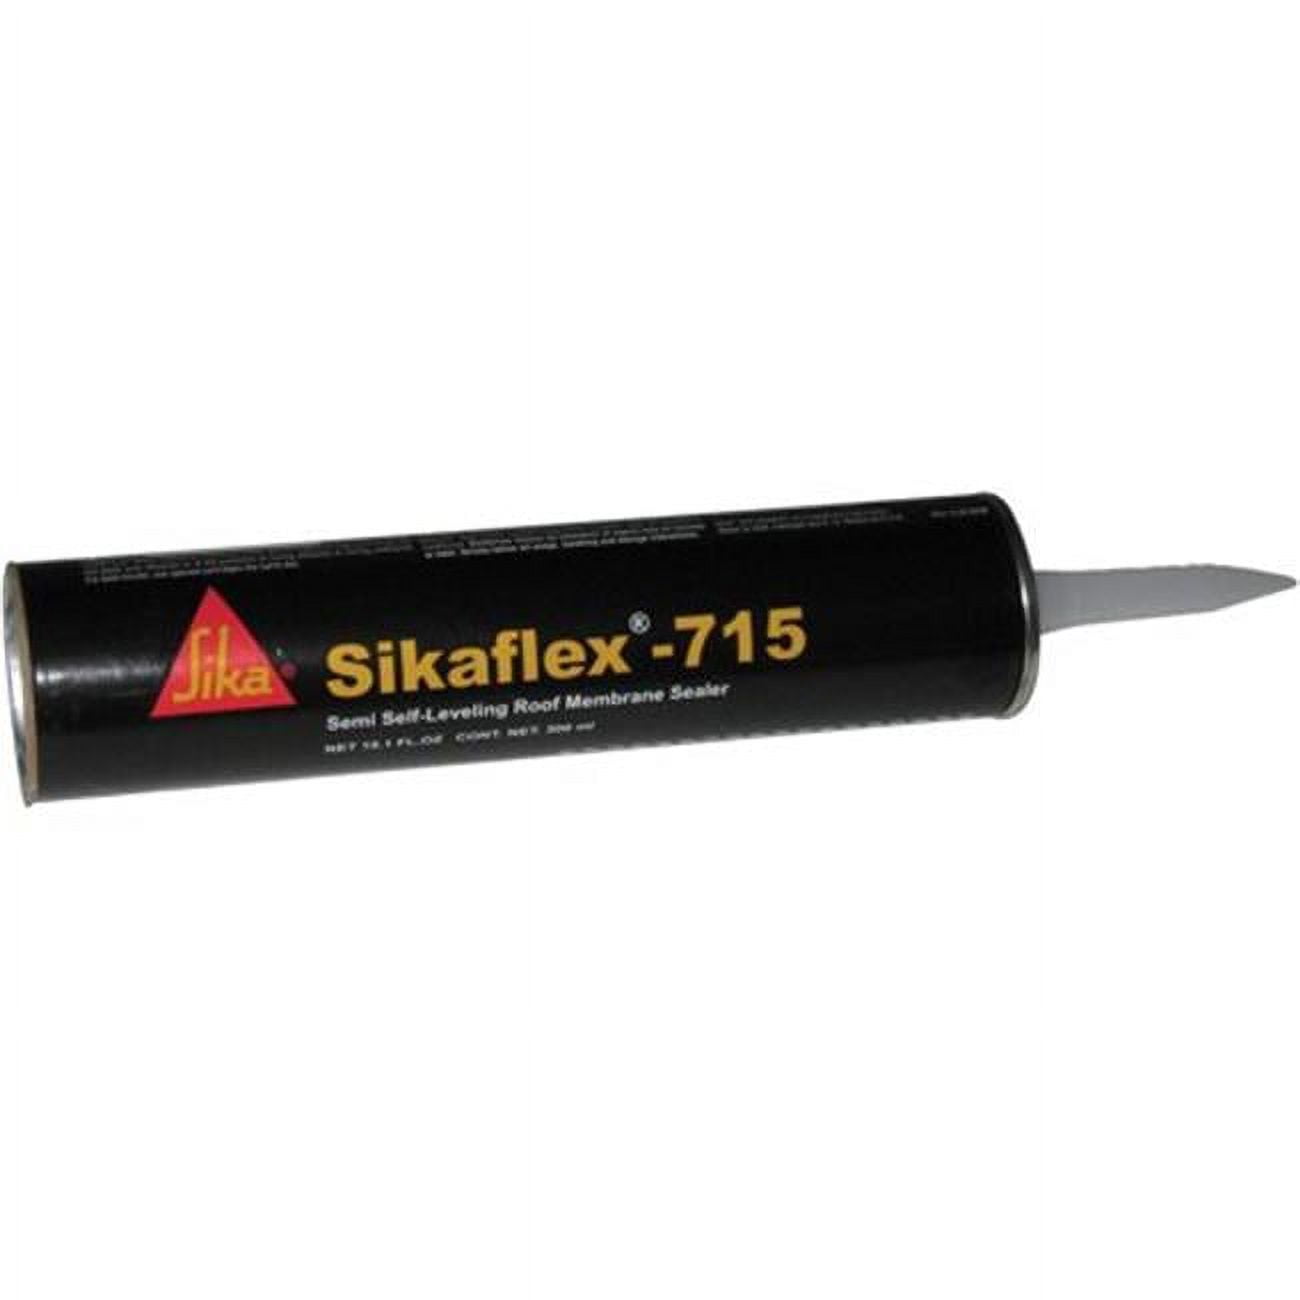 Sikaflex 10 oz 715 Caulk Semi Self Leveling RV Roof Sealant, White